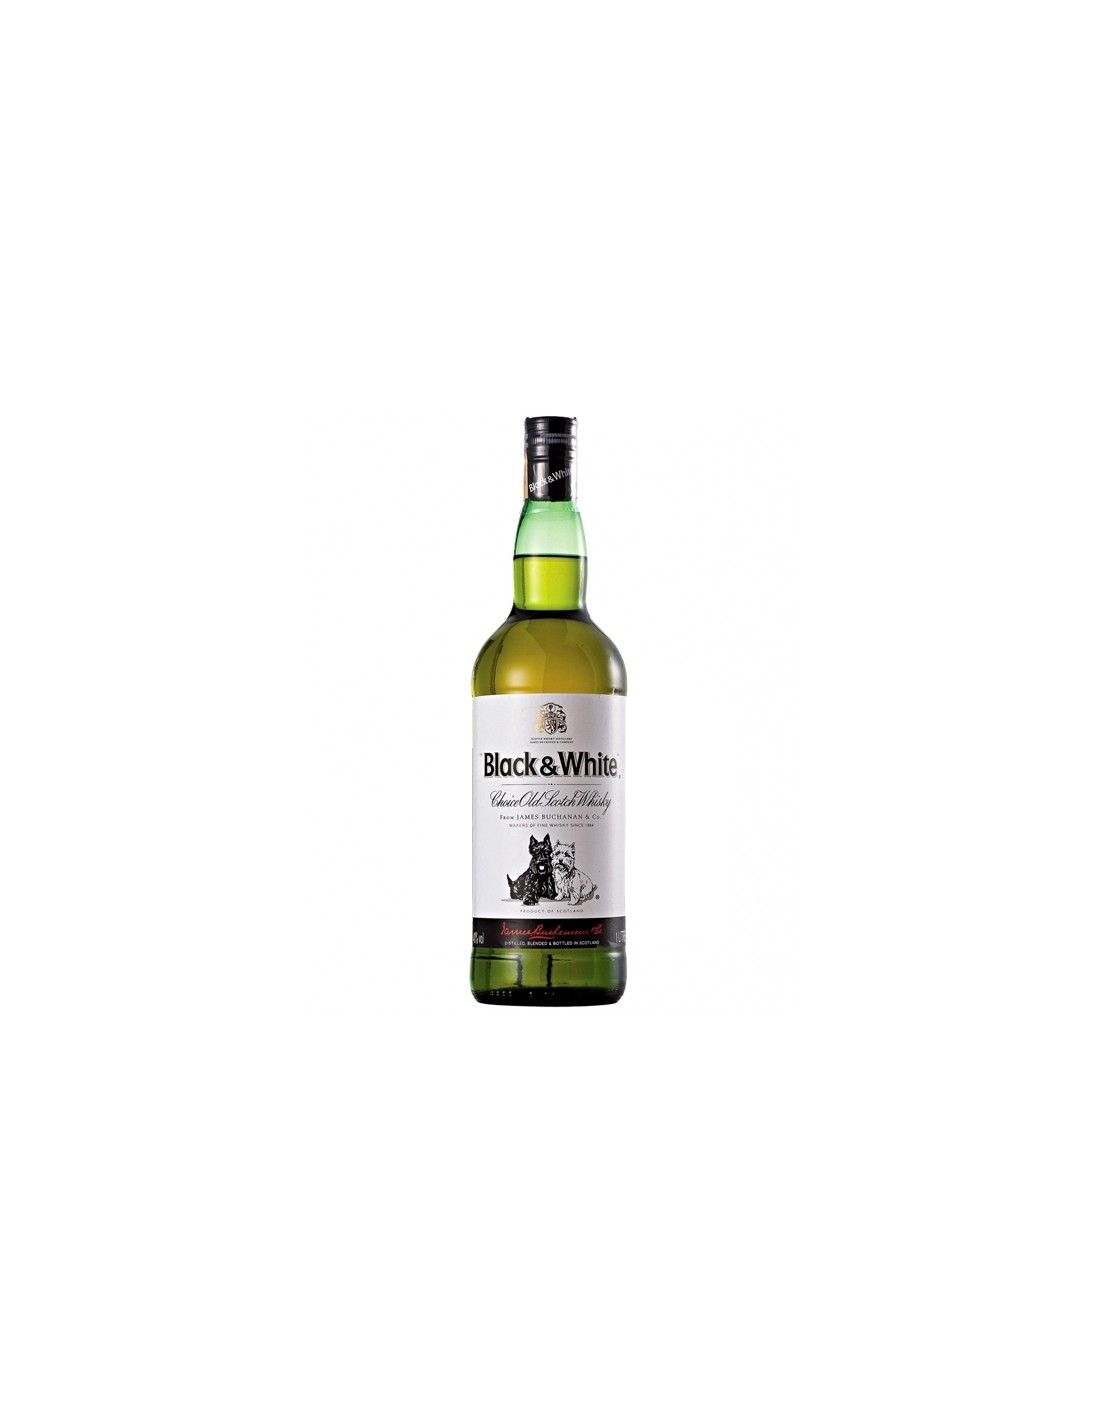 Whisky Black & White, 0.7L, 40% alc., Scotia alcooldiscount.ro